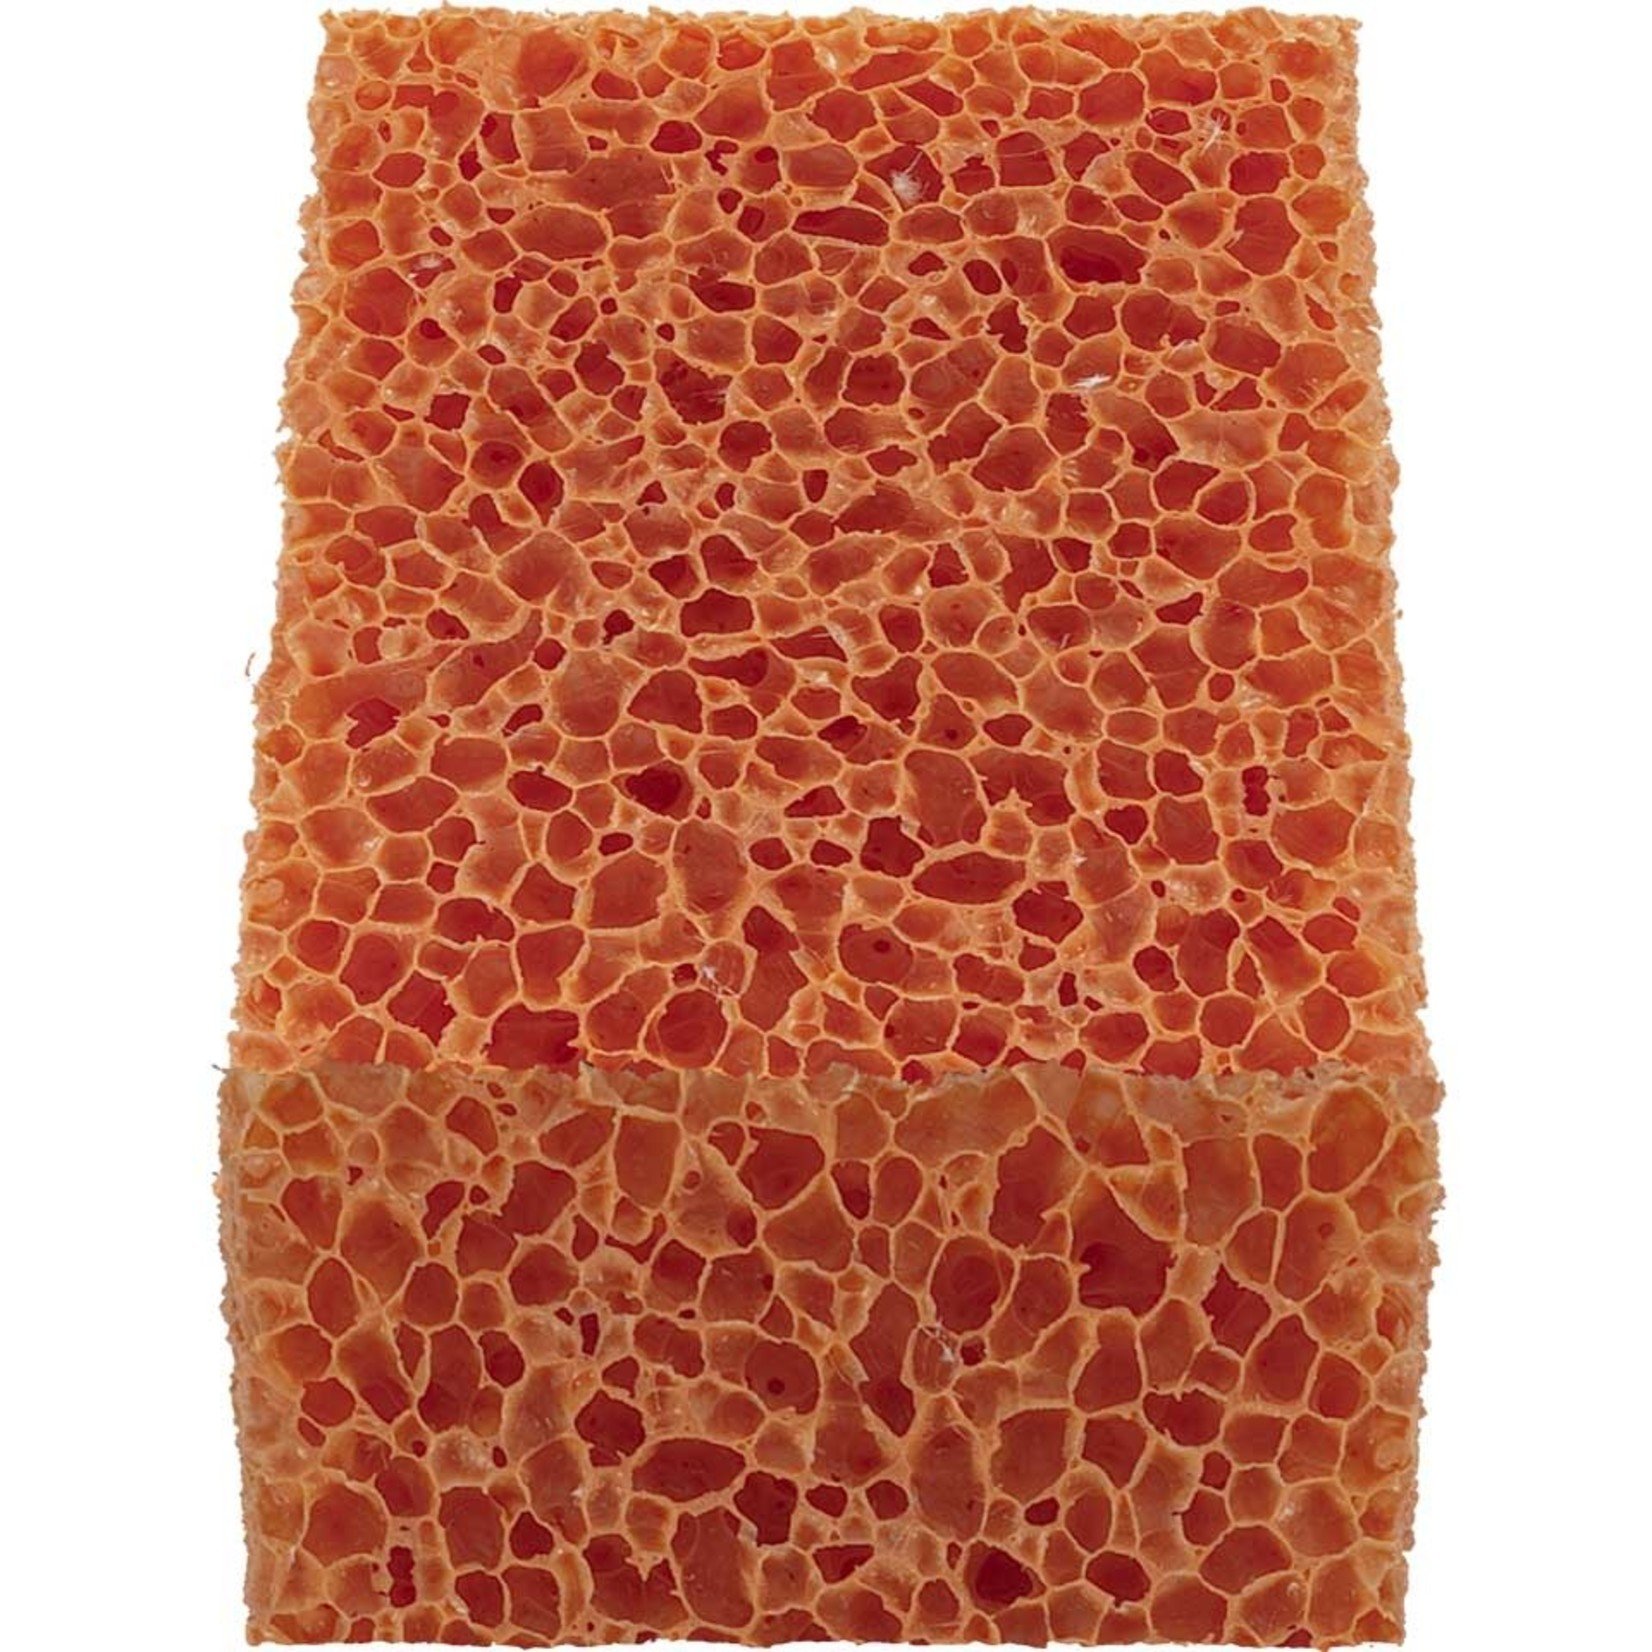 Kryolan Rubber Pore Sponge - 1pc Orange